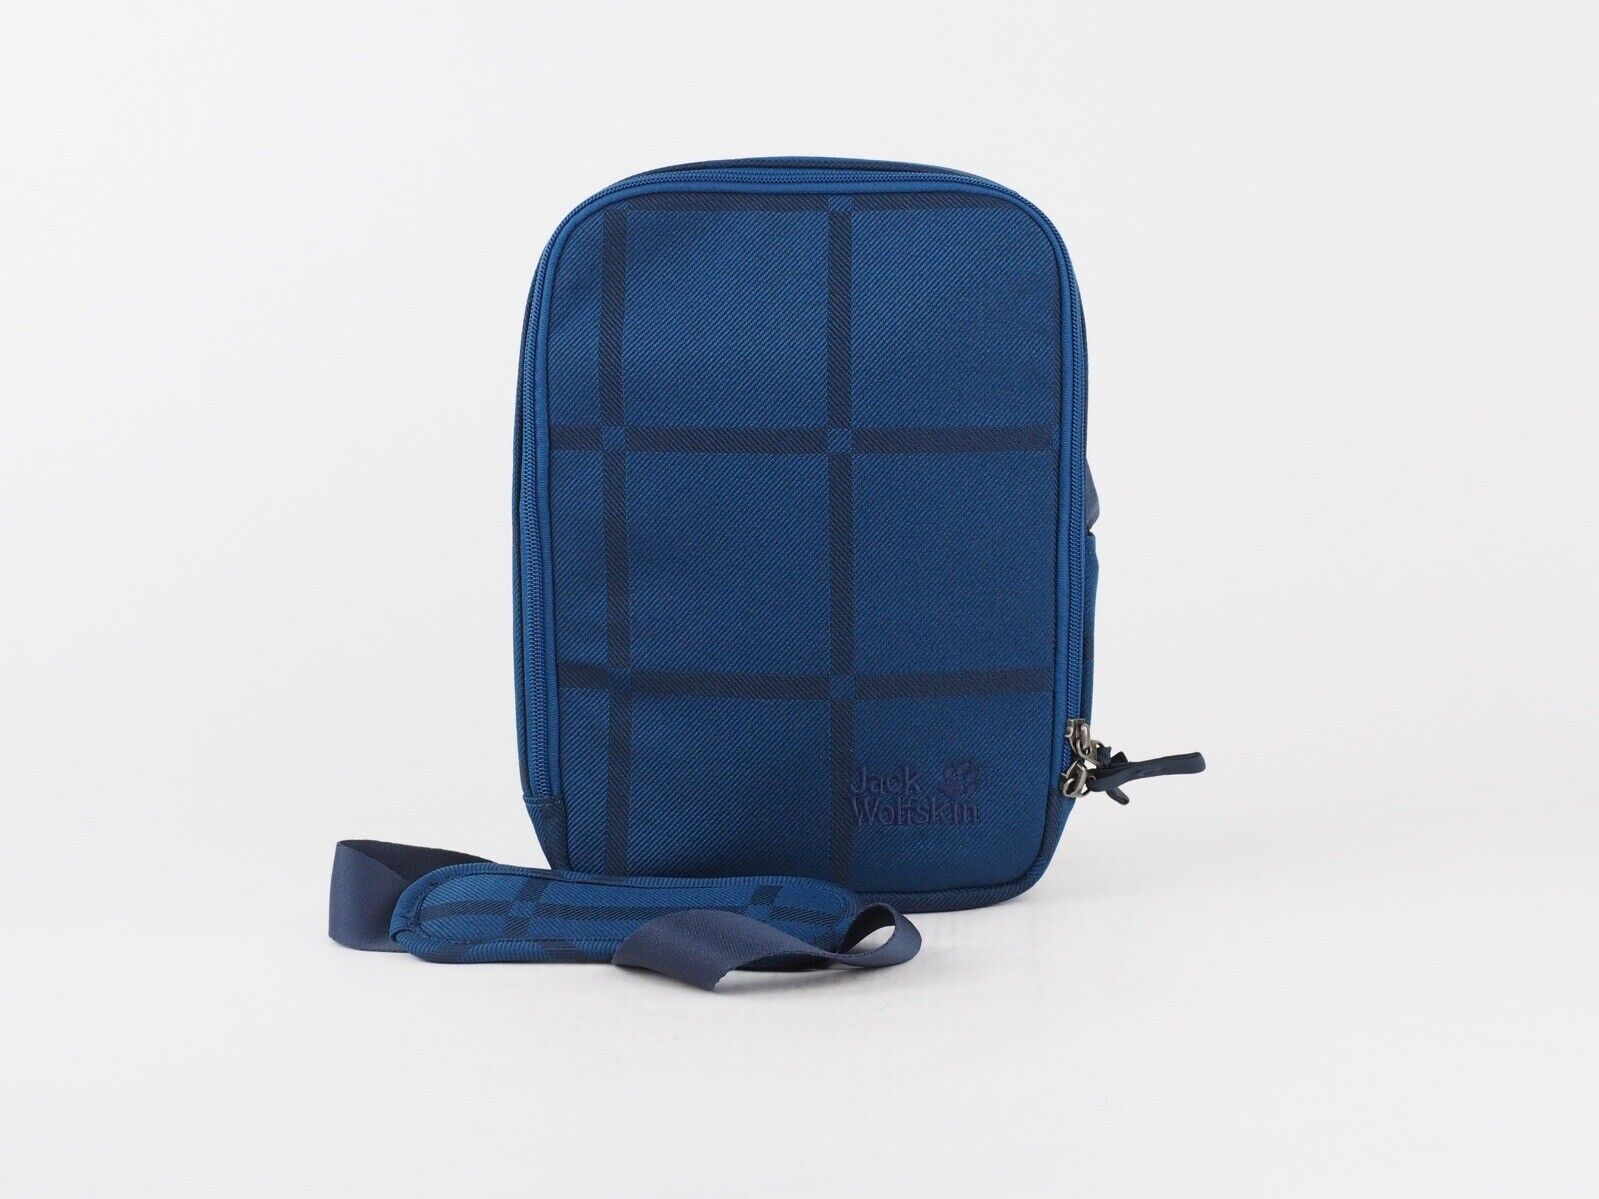 Mens Jack Wolfskin Gadgetry Practical Padded Shoulder Bag In Indigo Blue Check - London Top Style